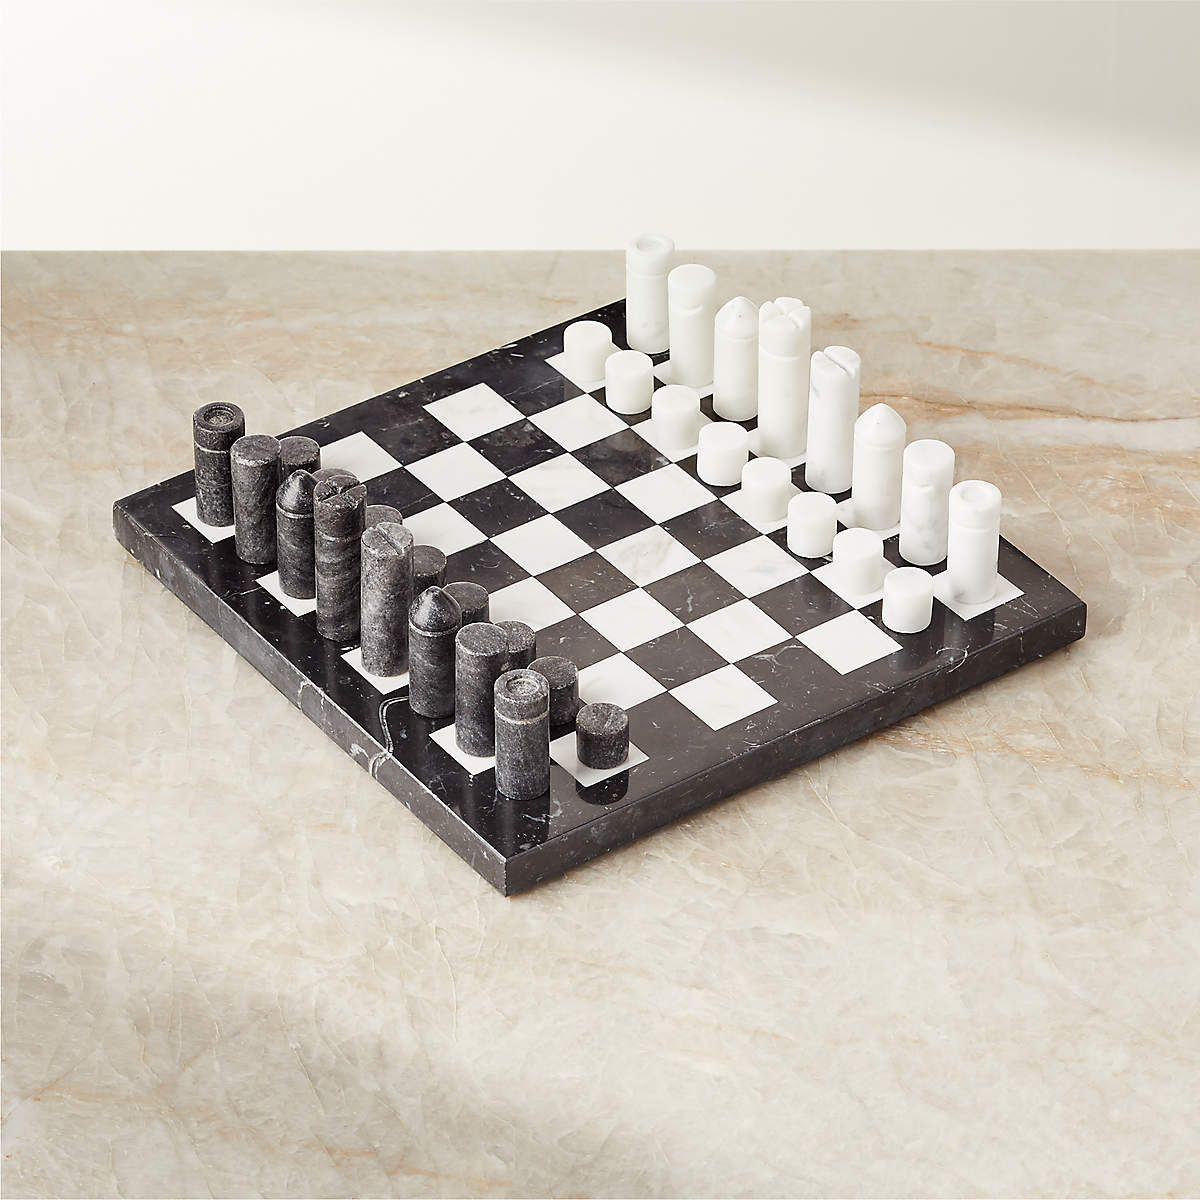 gatz-black-and-white-marble-chess-set.jpg